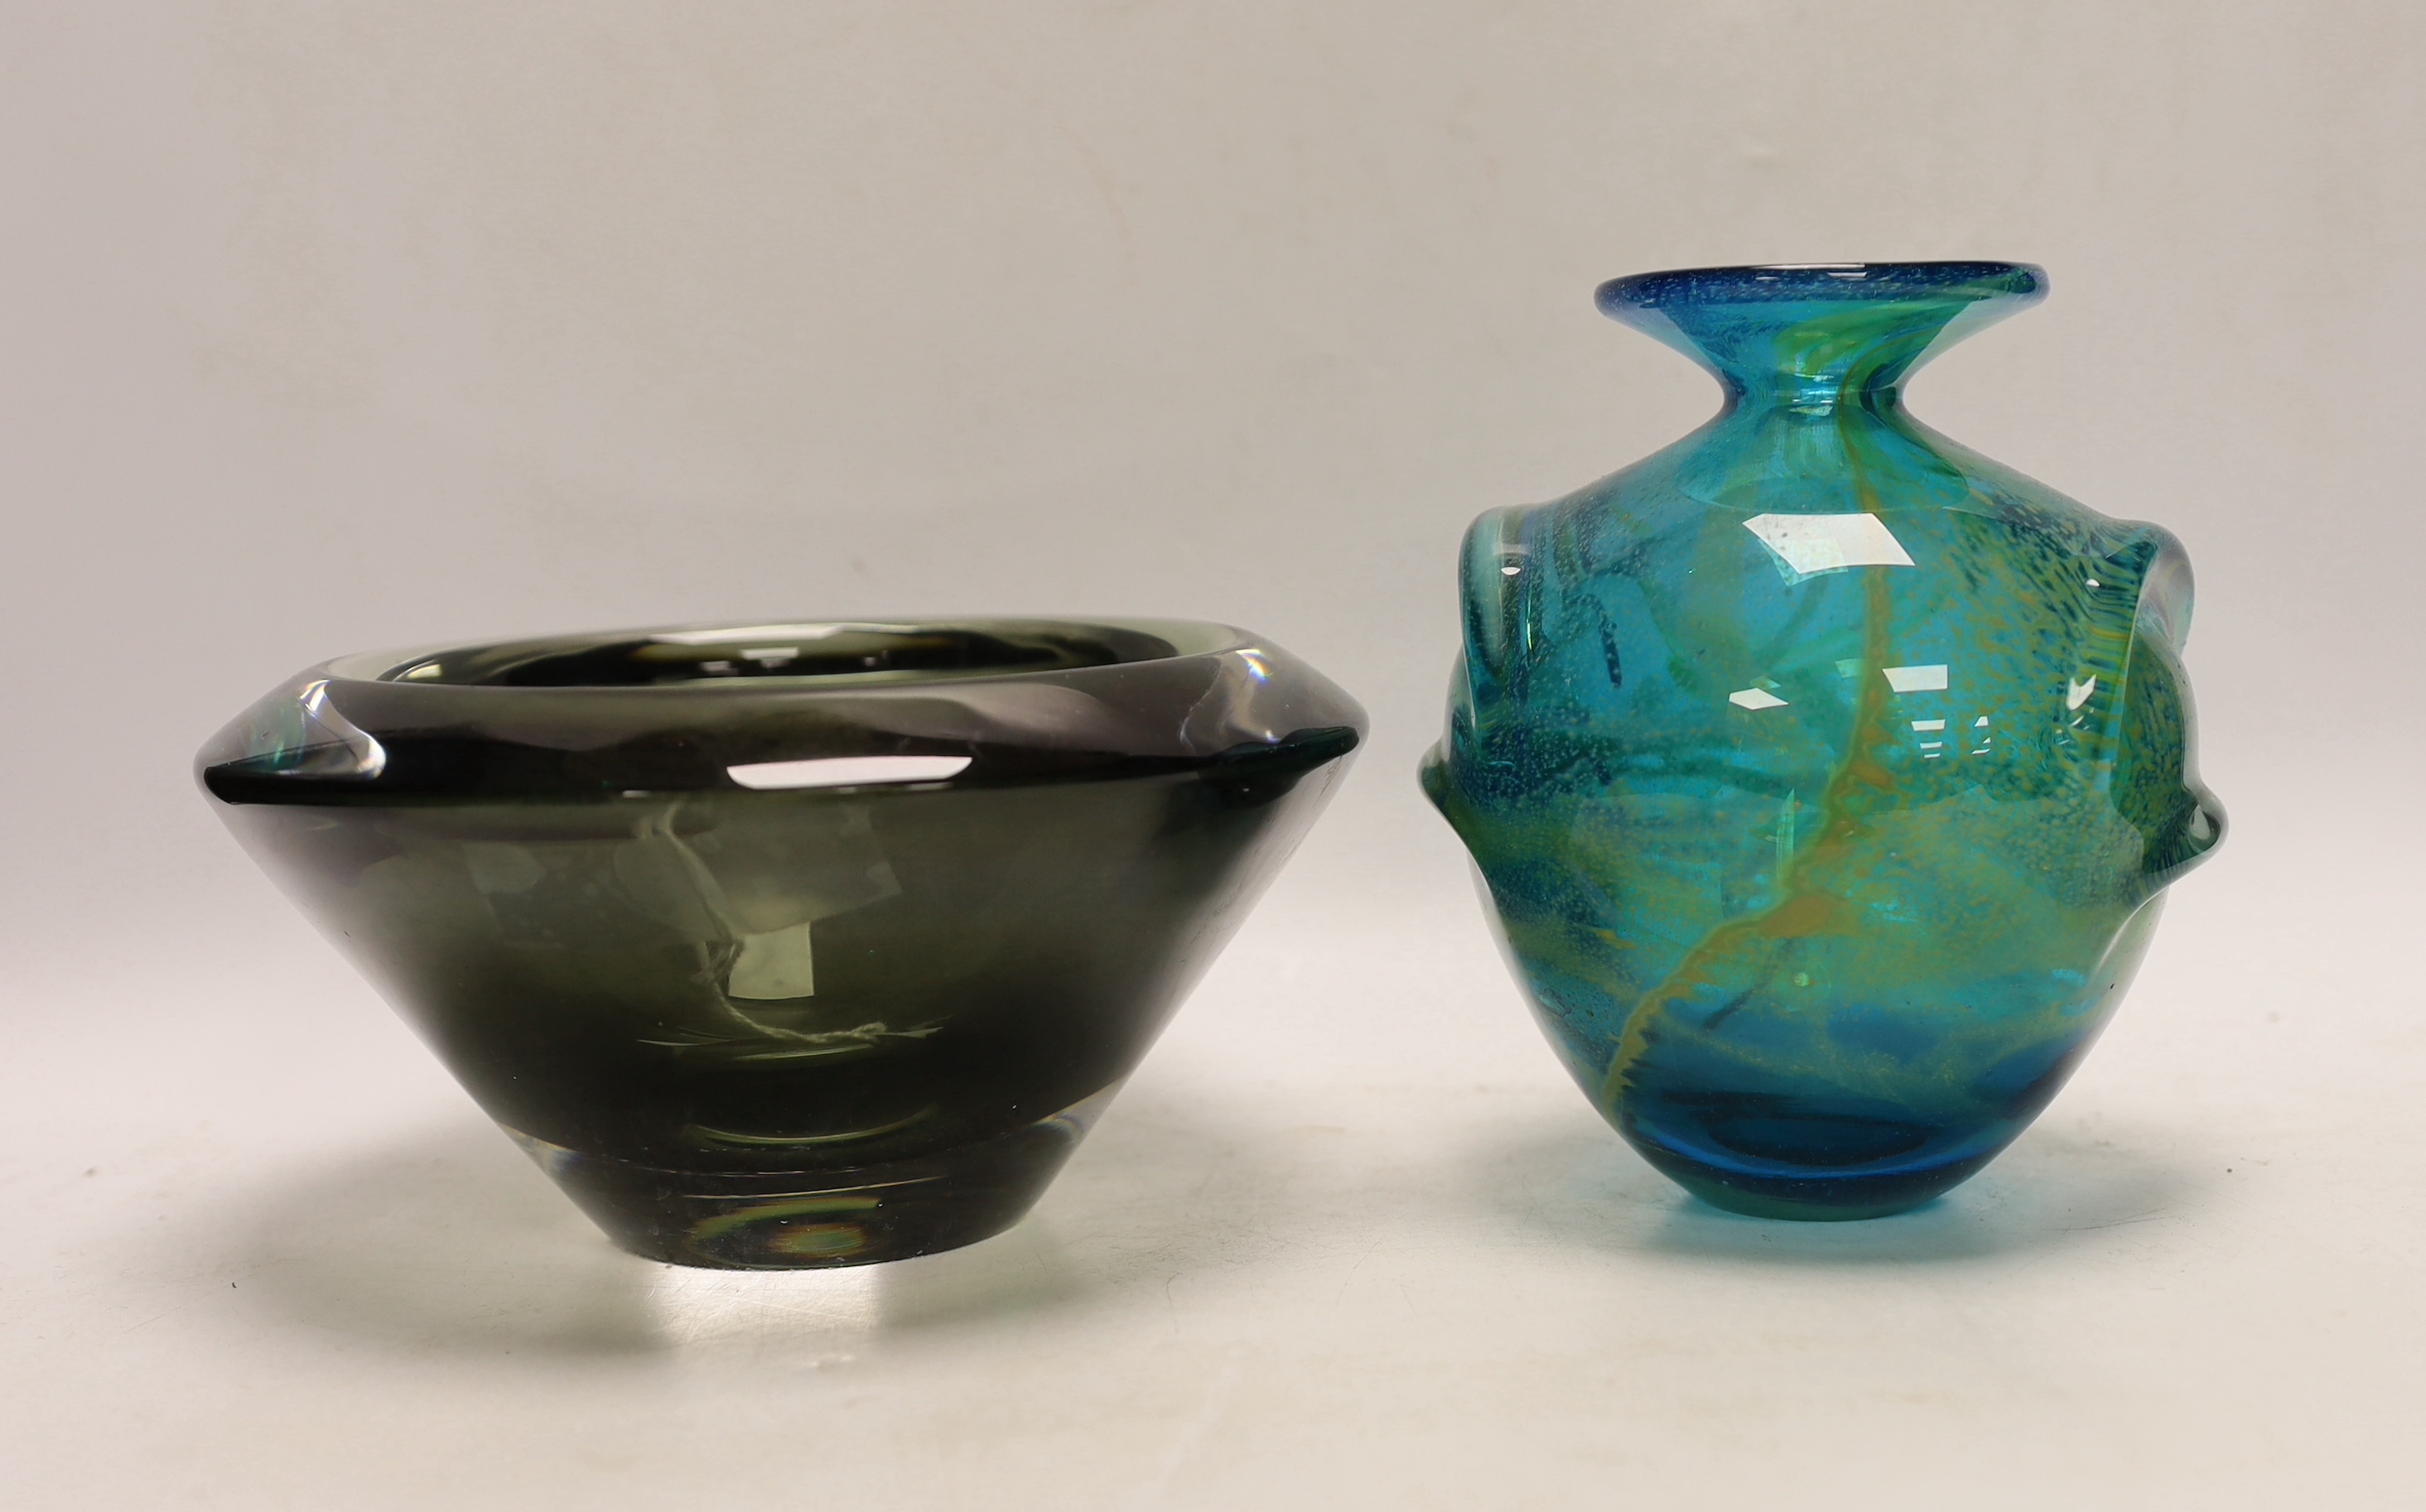 A Mdina 'Pulled Ear' glass vase, a Monart glass dish and an art glass bowl, tallest 15.5cm